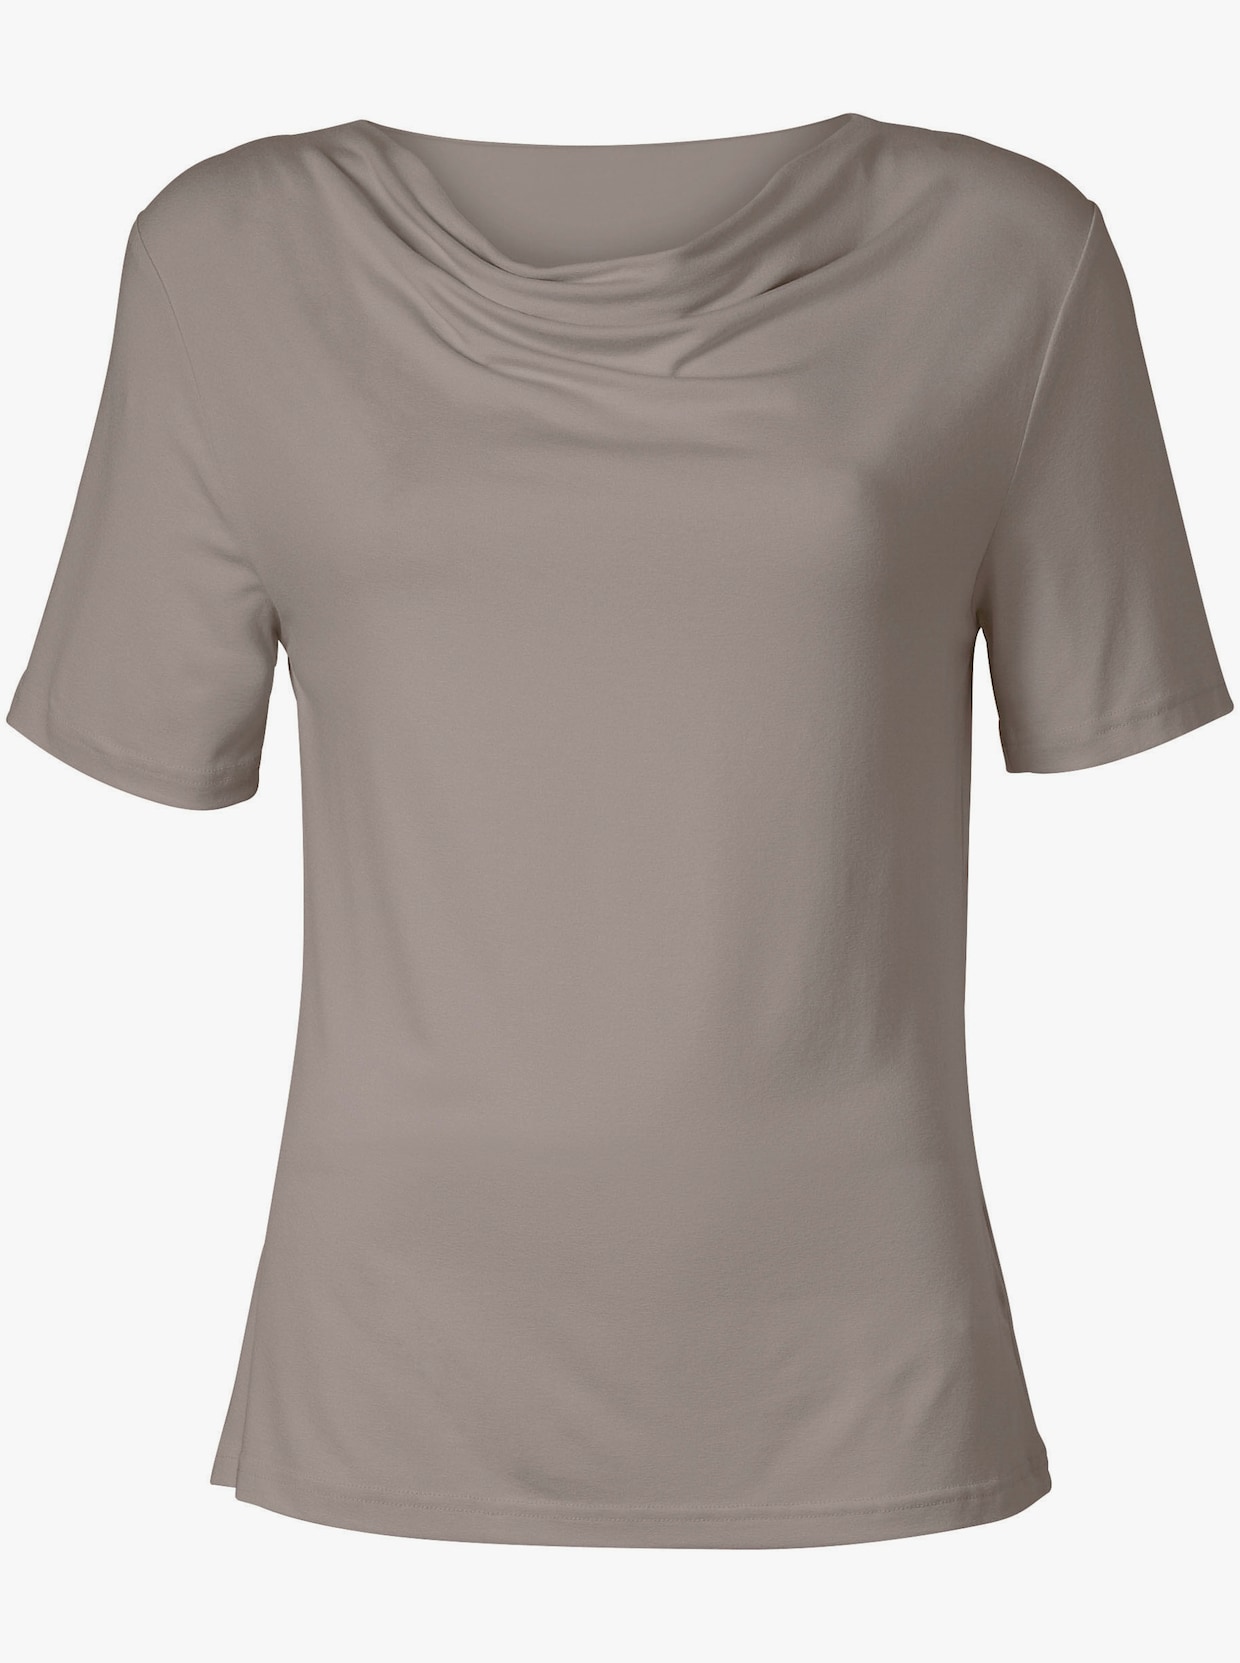 Tričko s vodopádovým golierom - hnedosivá